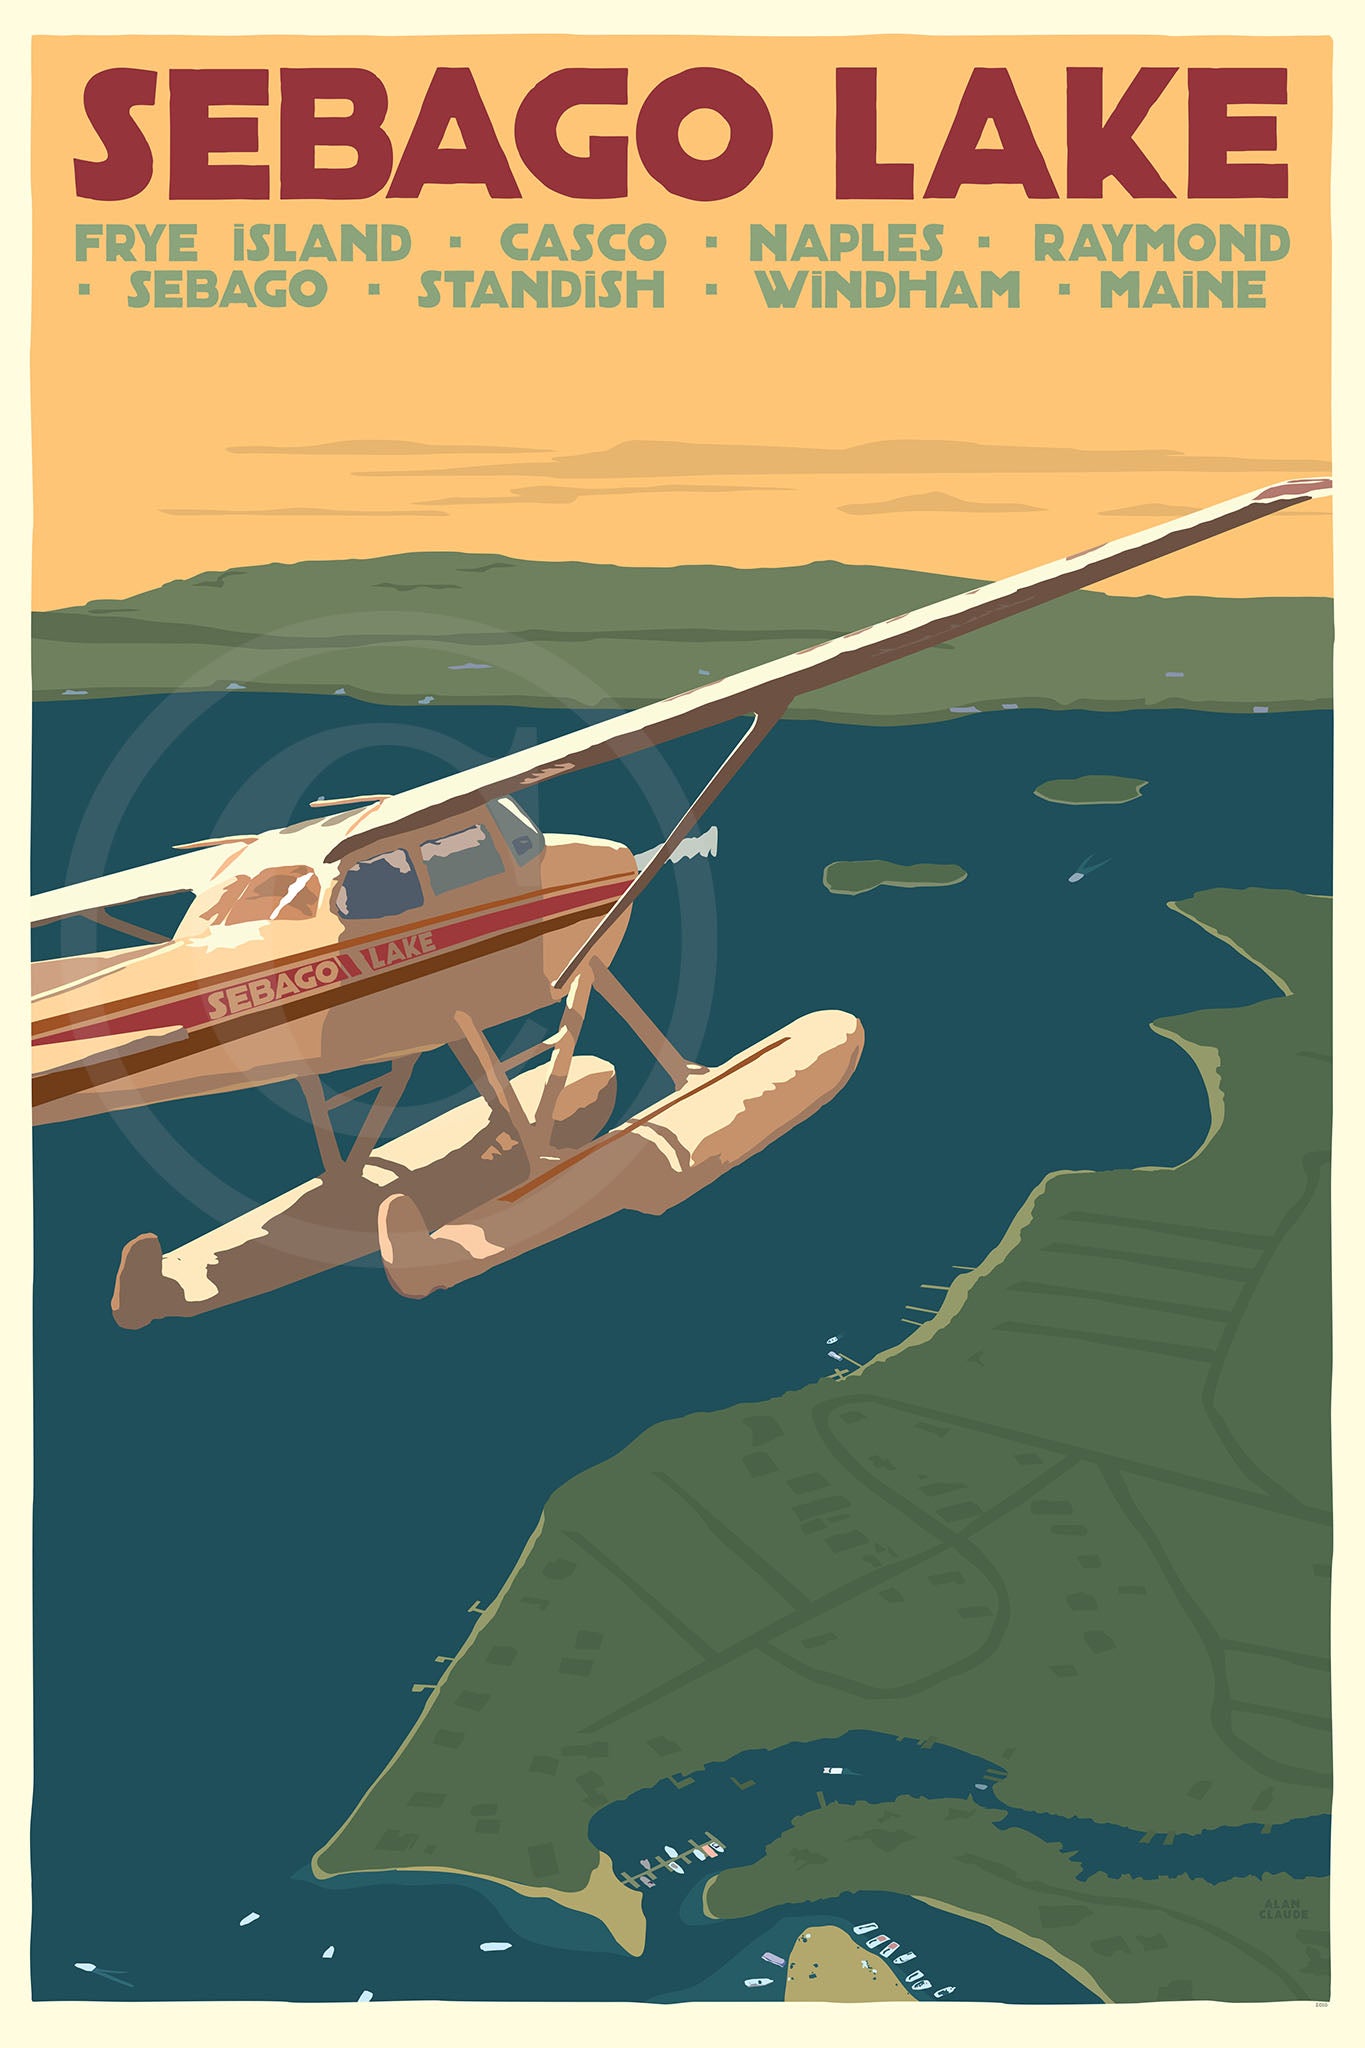 Sebago Lake Seaplane Art Print 36" x 53" Travel Poster By Alan Claude - Maine